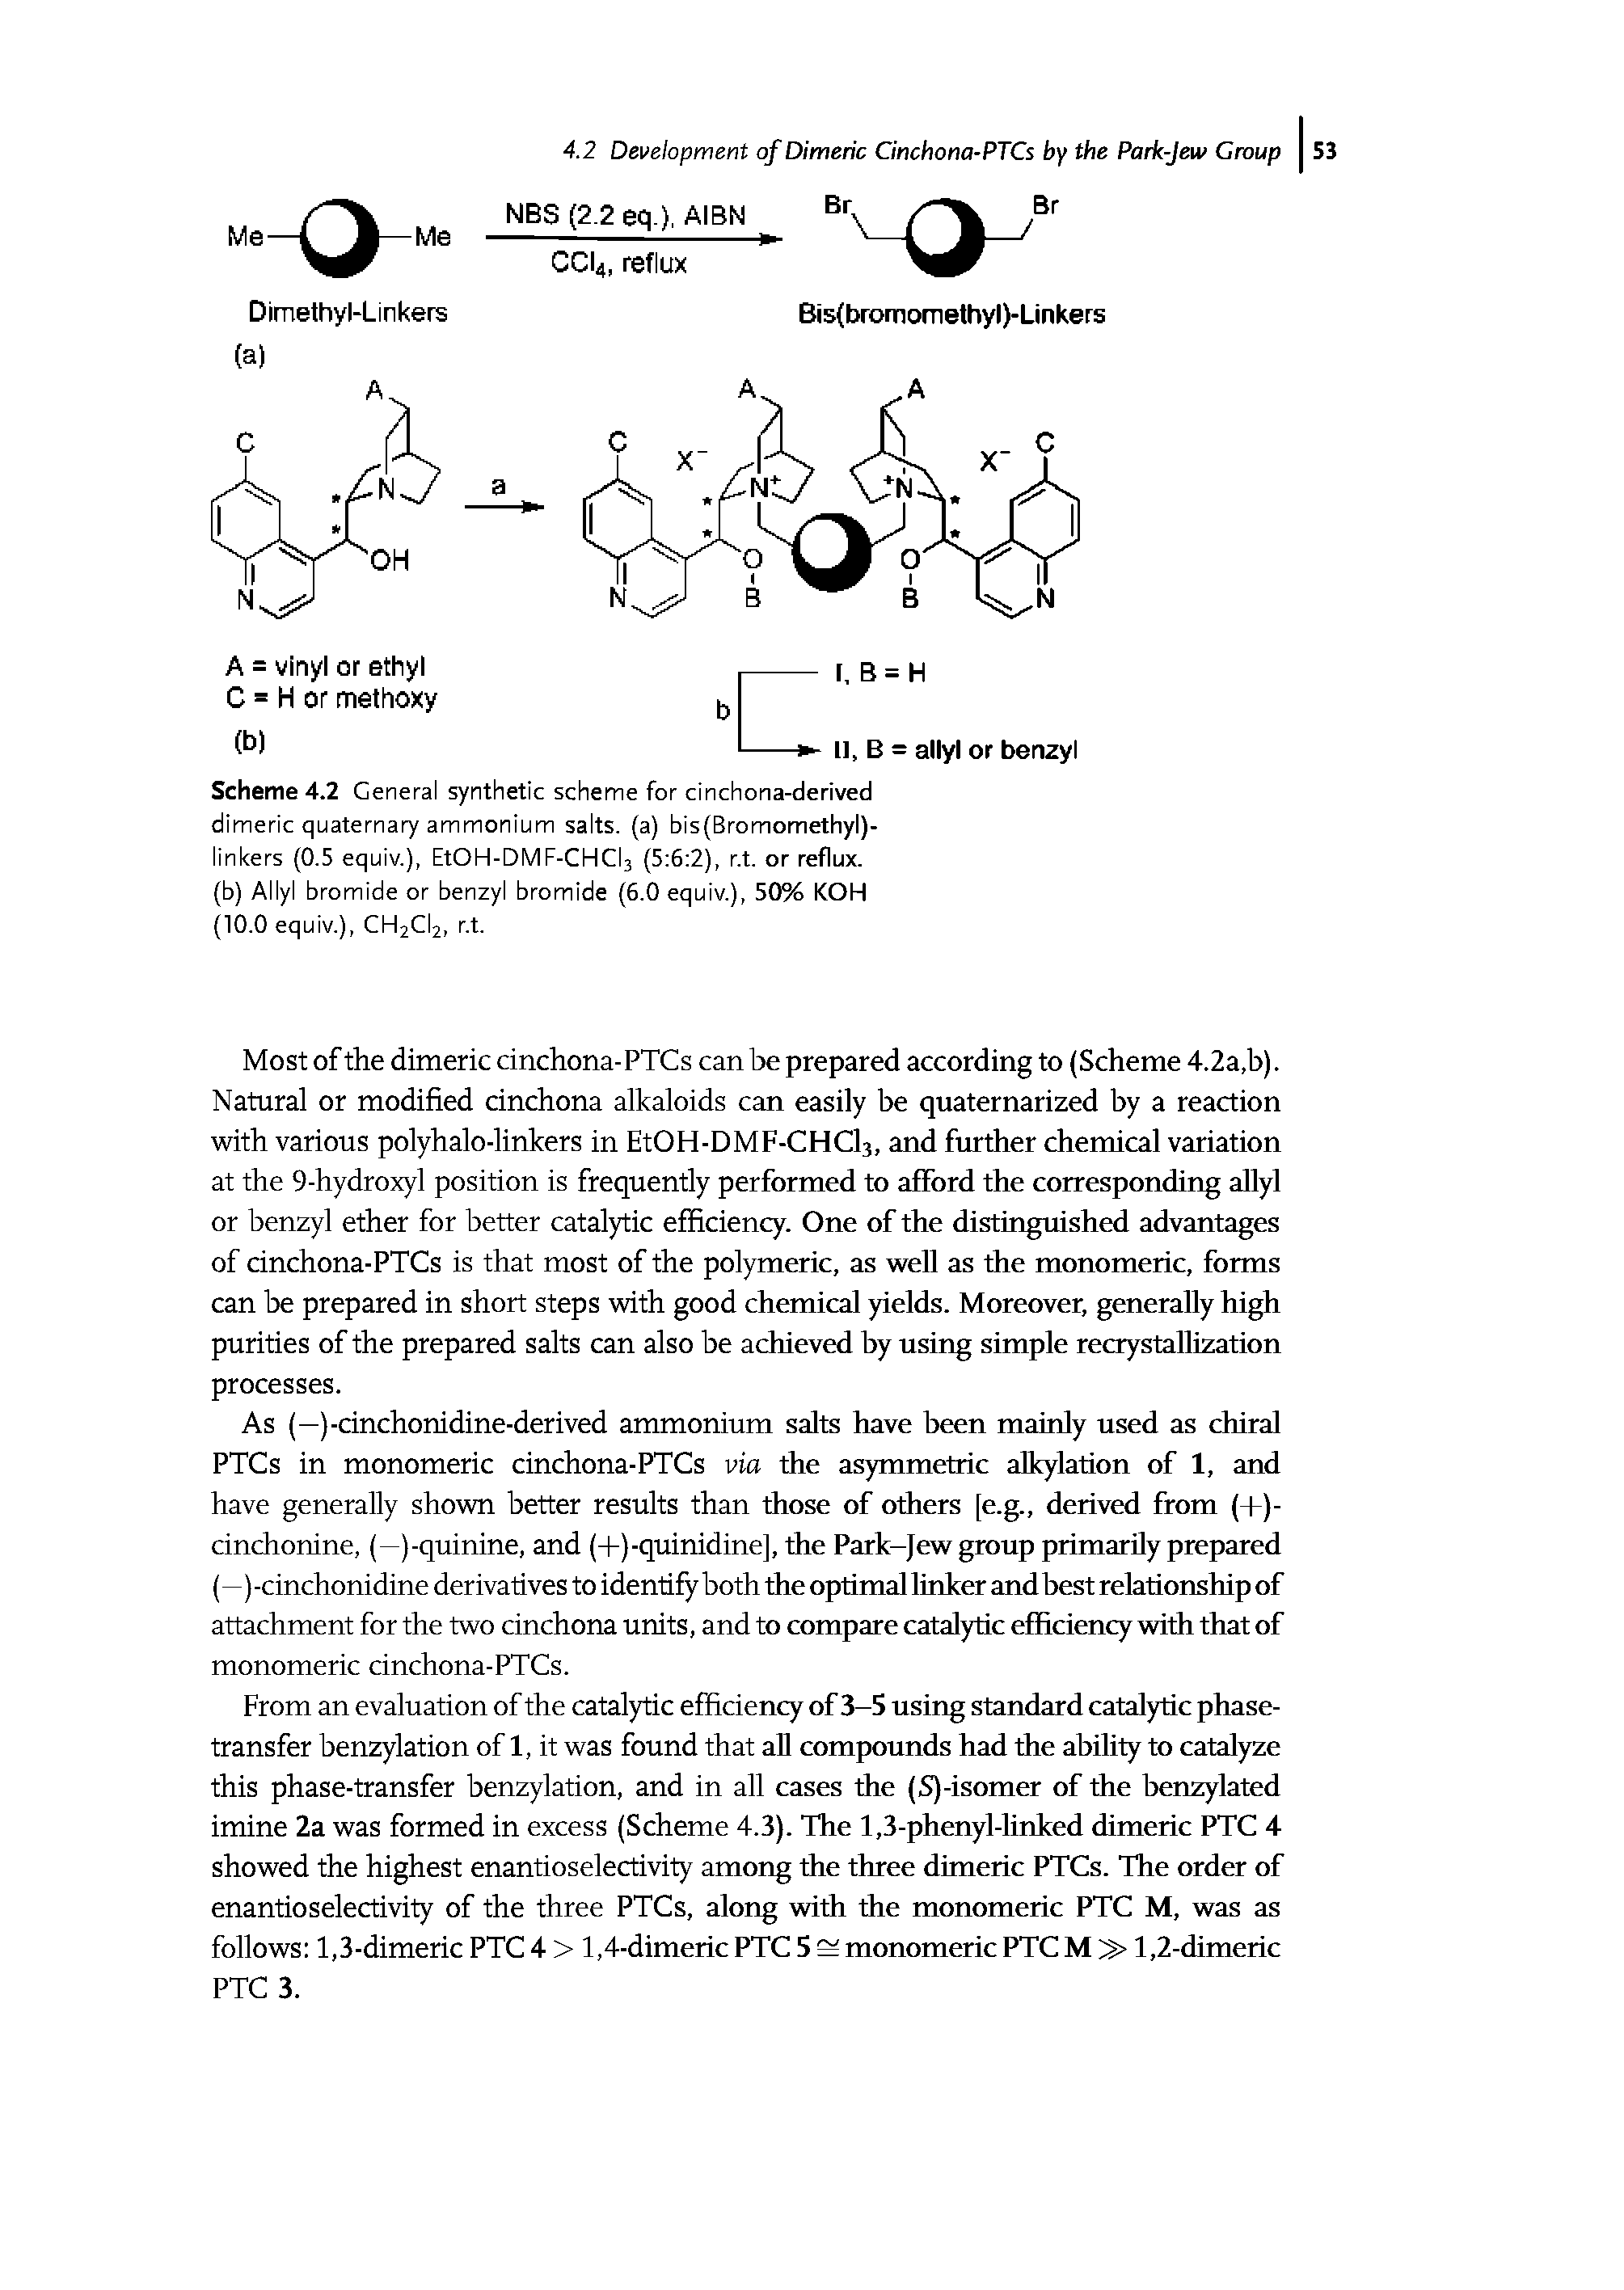 Scheme 4.2 General synthetic scheme for cinchona-derived dimeric quaternary ammonium salts, (a) bis(Bromomethyl)-linkers (0.5 equiv.), EtOH-DMF-CHCI3 (5 6 2), r.t. or reflux, (b) Allyl bromide or benzyl bromide (6.0 equiv.), 50% KOH (10.0 equiv.), CH2CI2, r.t.